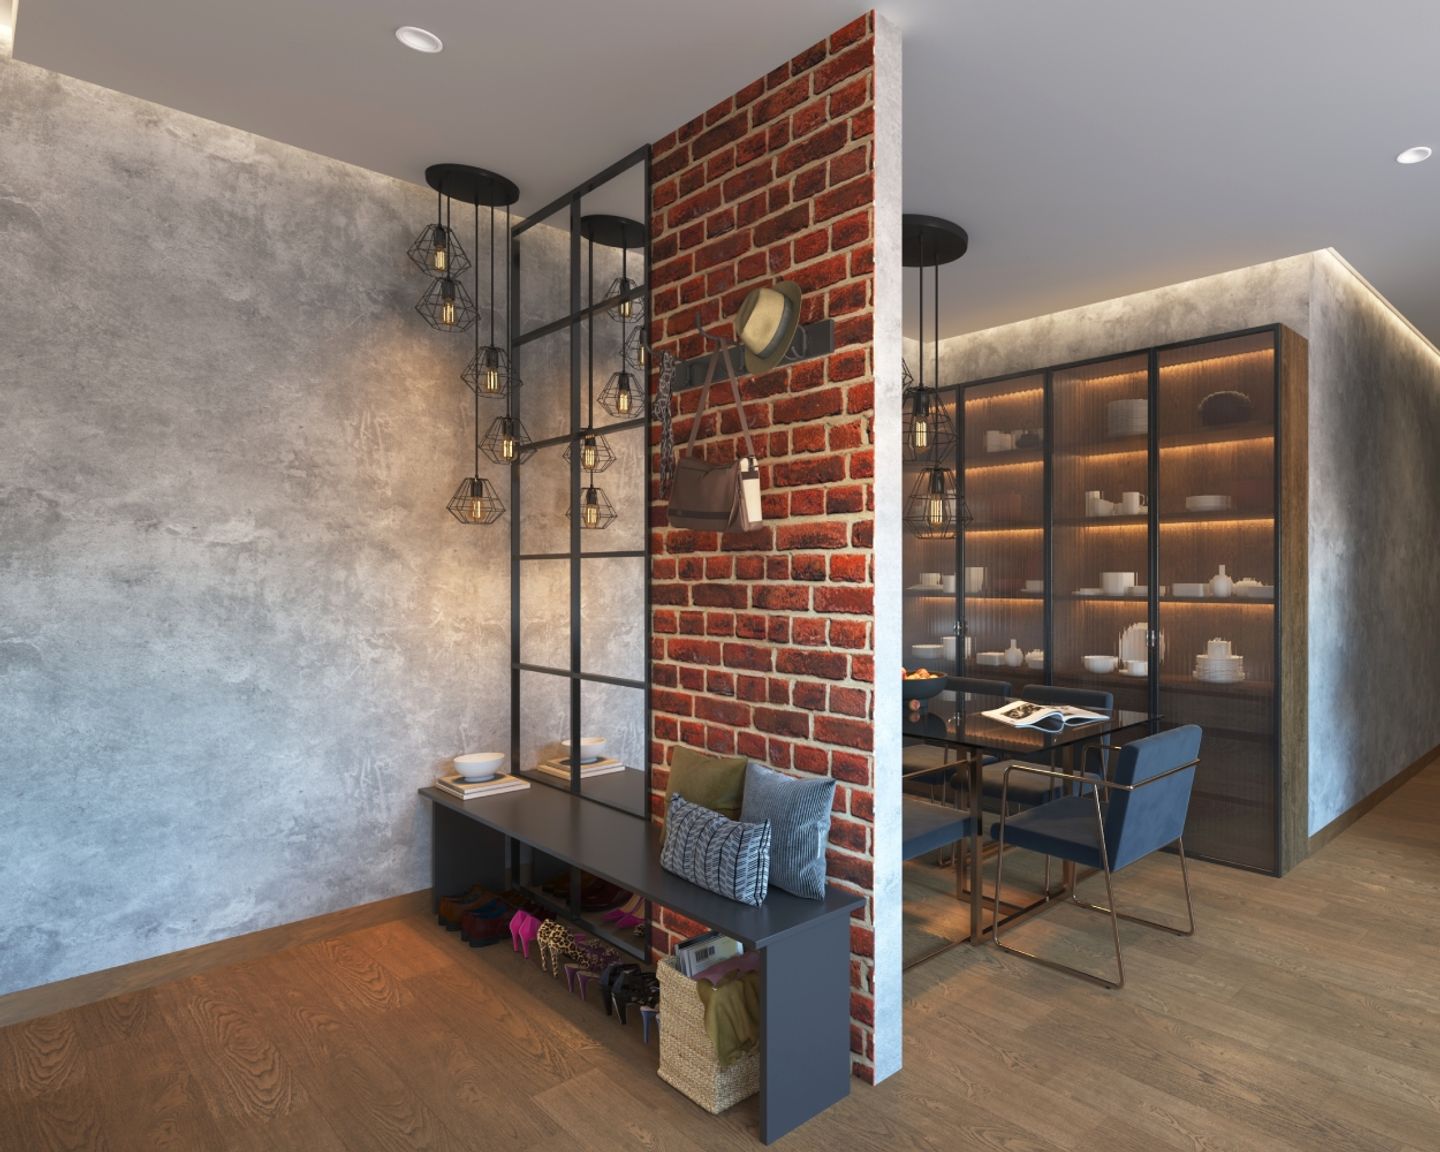 9x8 Ft Industrial Foyer Design With Brick Wallpaper - Livspace